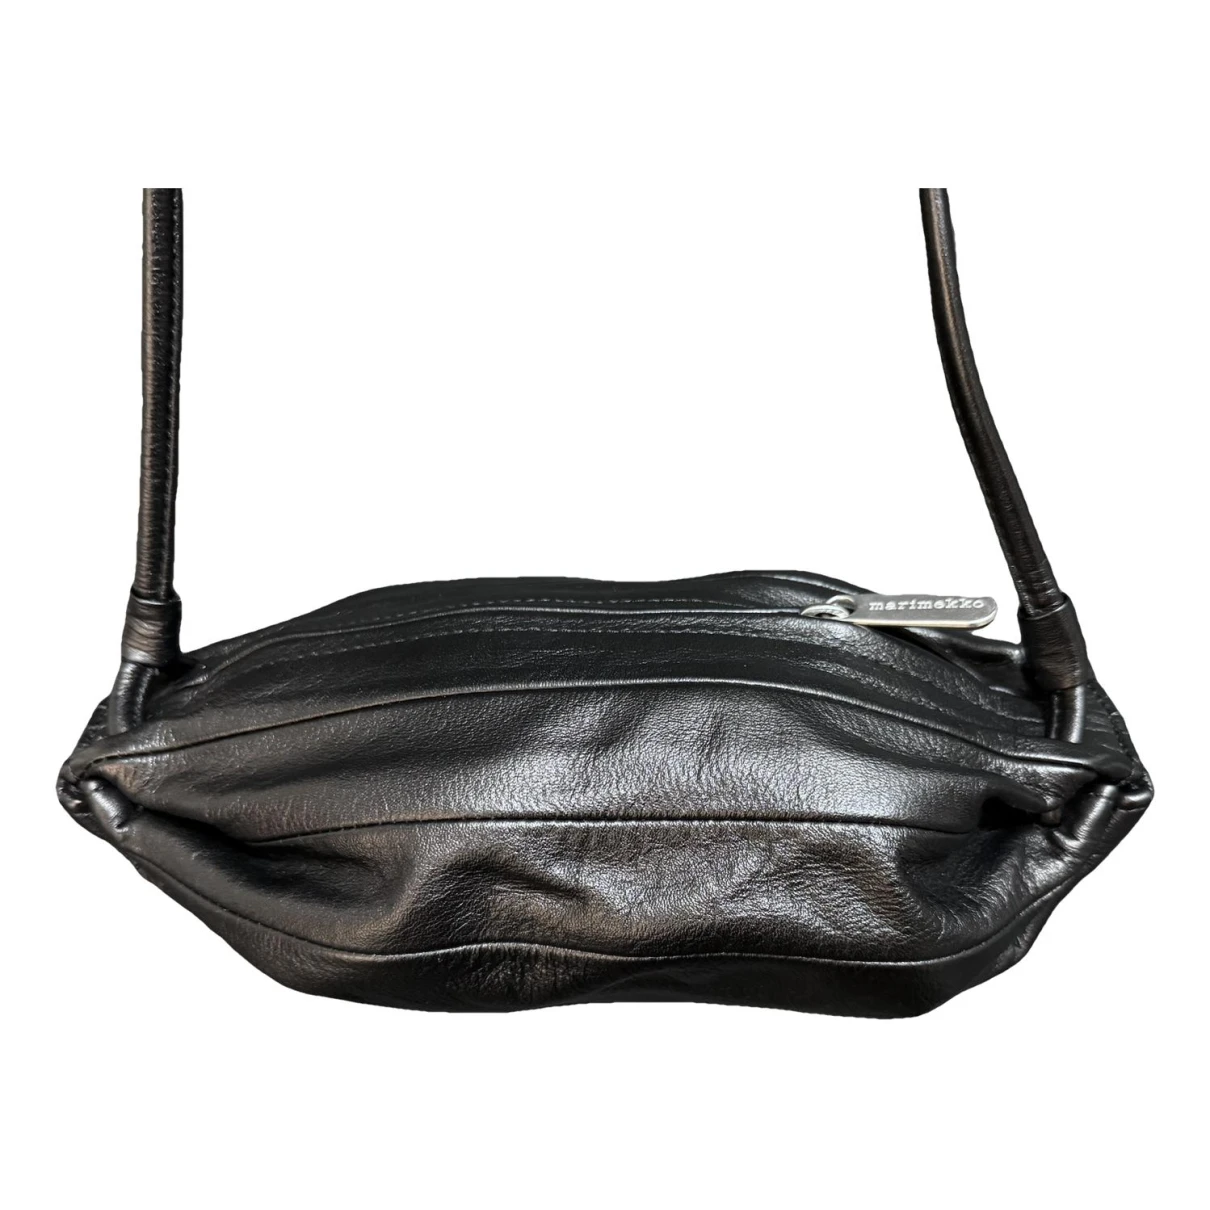 Pre-owned Marimekko Leather Handbag In Black